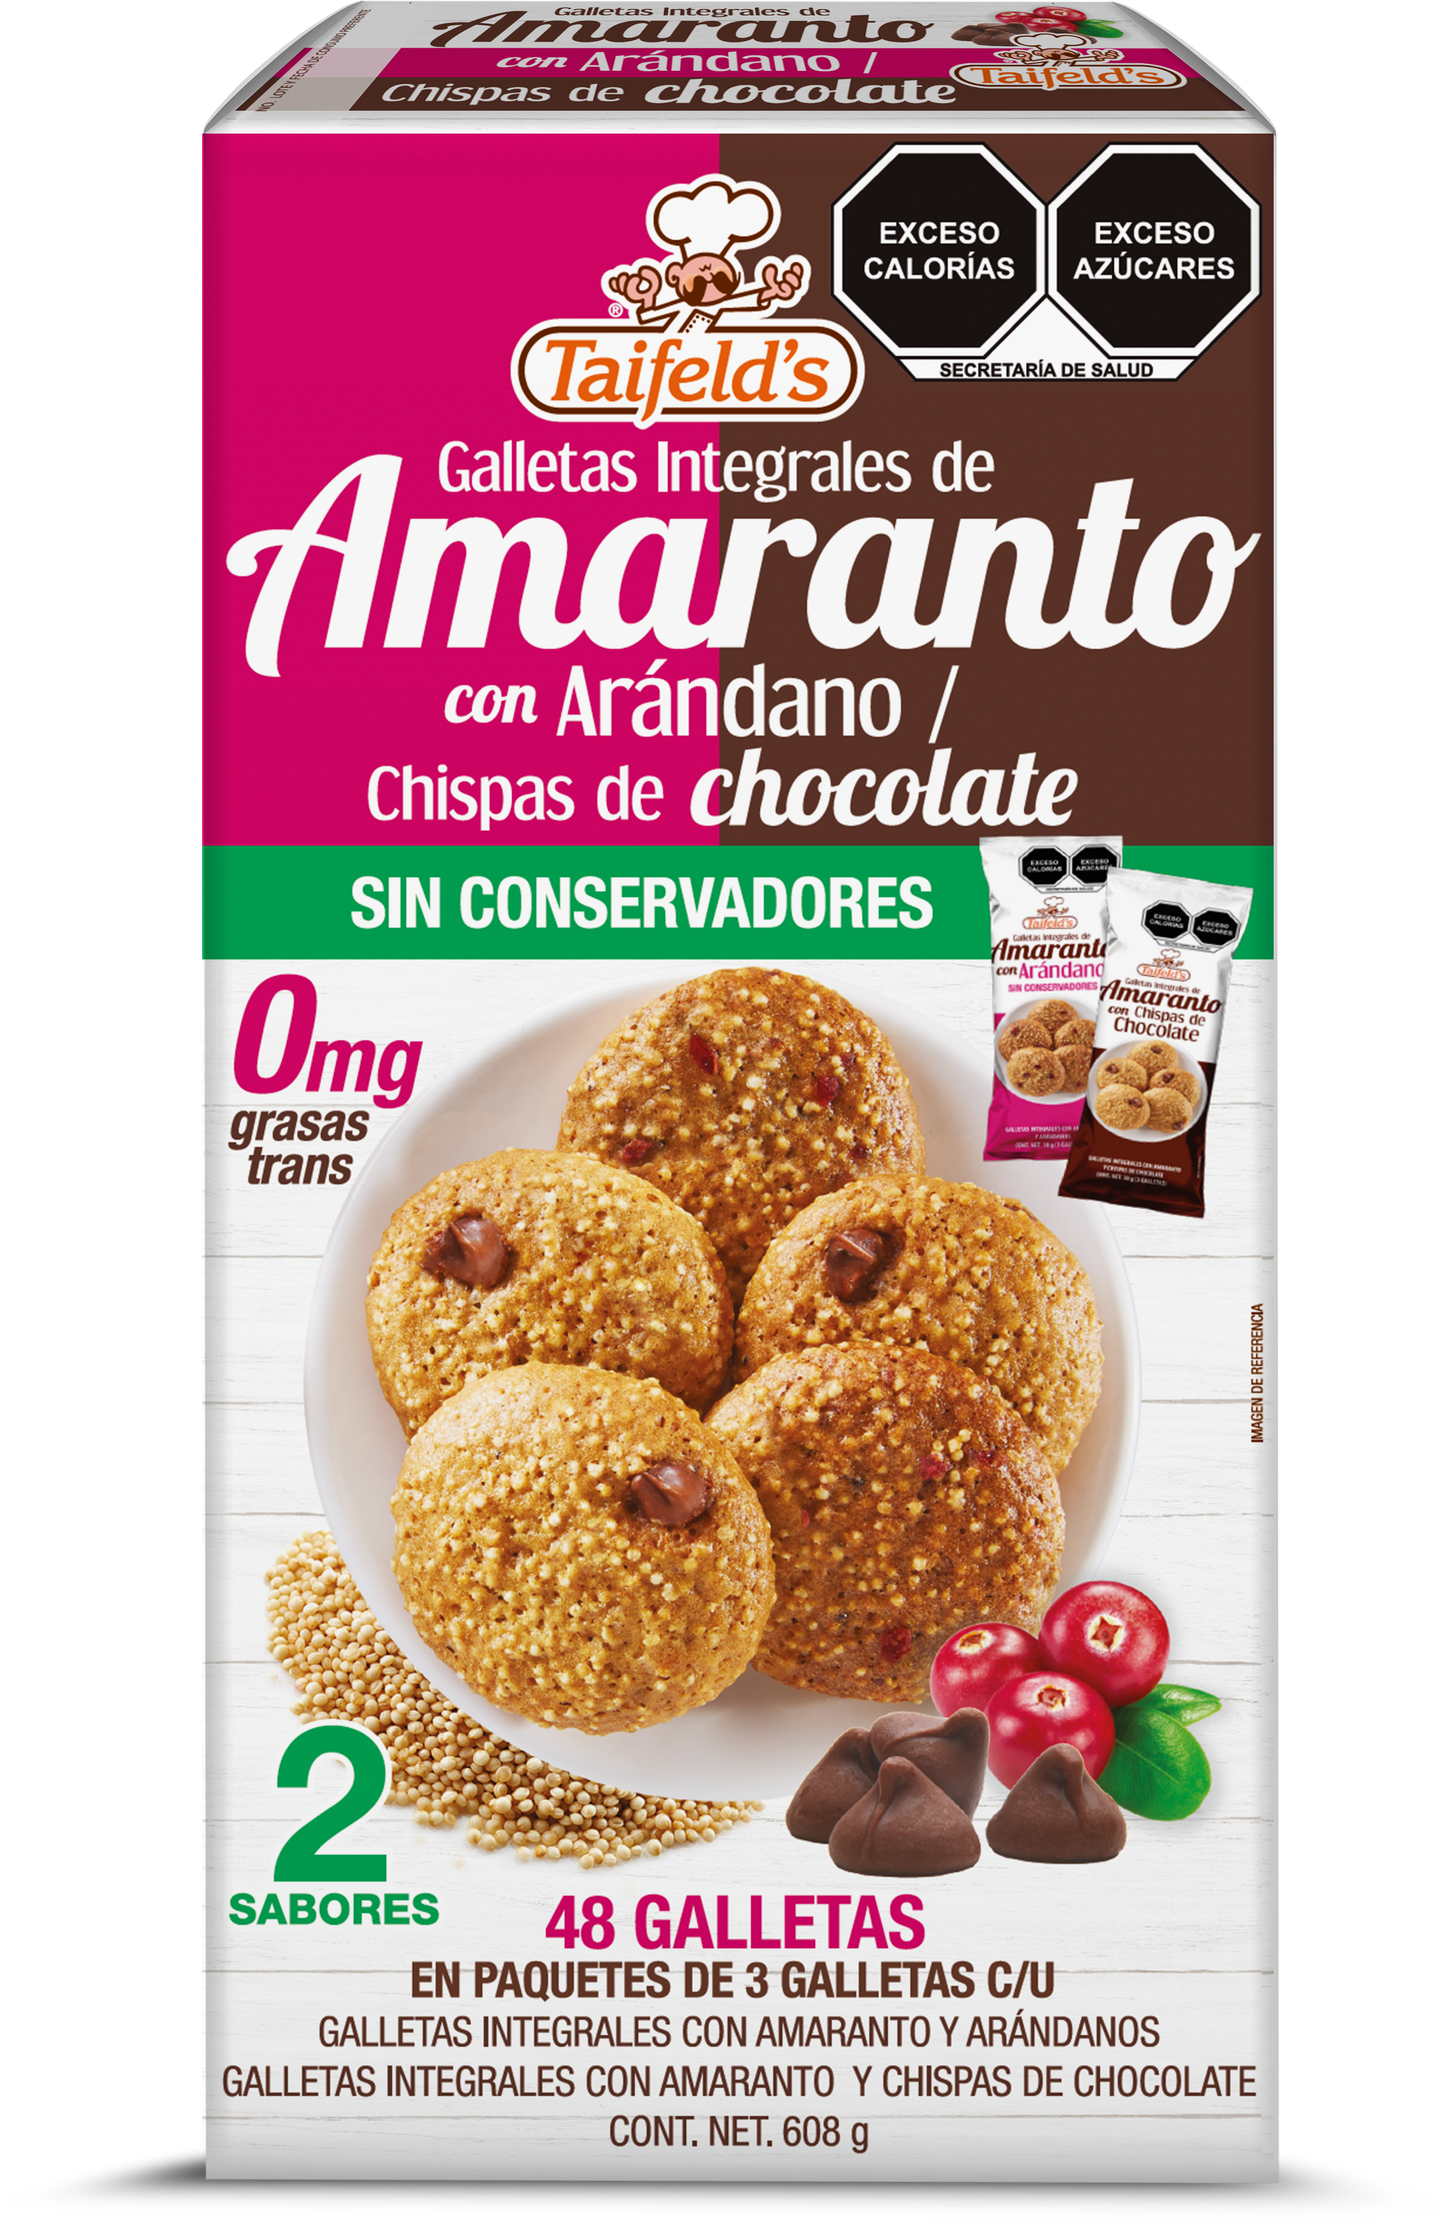 Amaranth cranberry / chocolate chip amaranth cookies